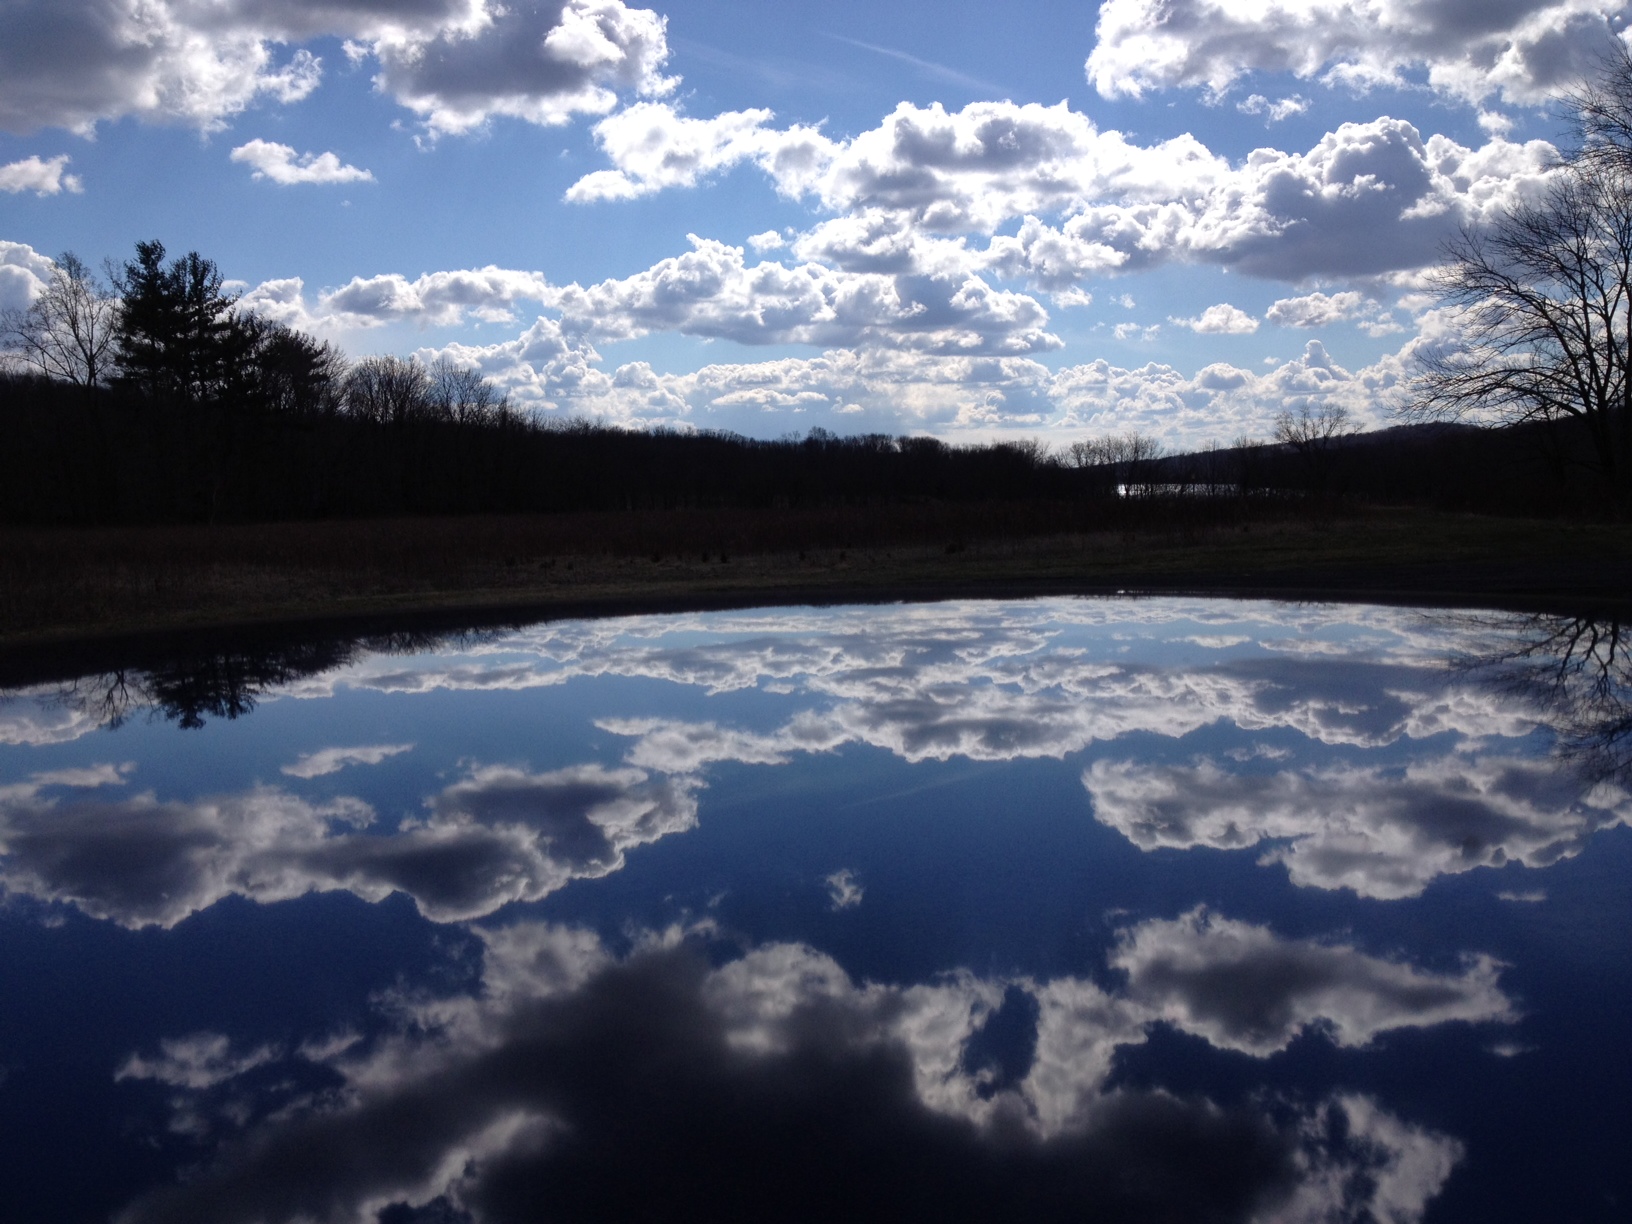 clouds-over-peace-valley-park-bucks-county-pa-by-joe-mckendrick.jpg